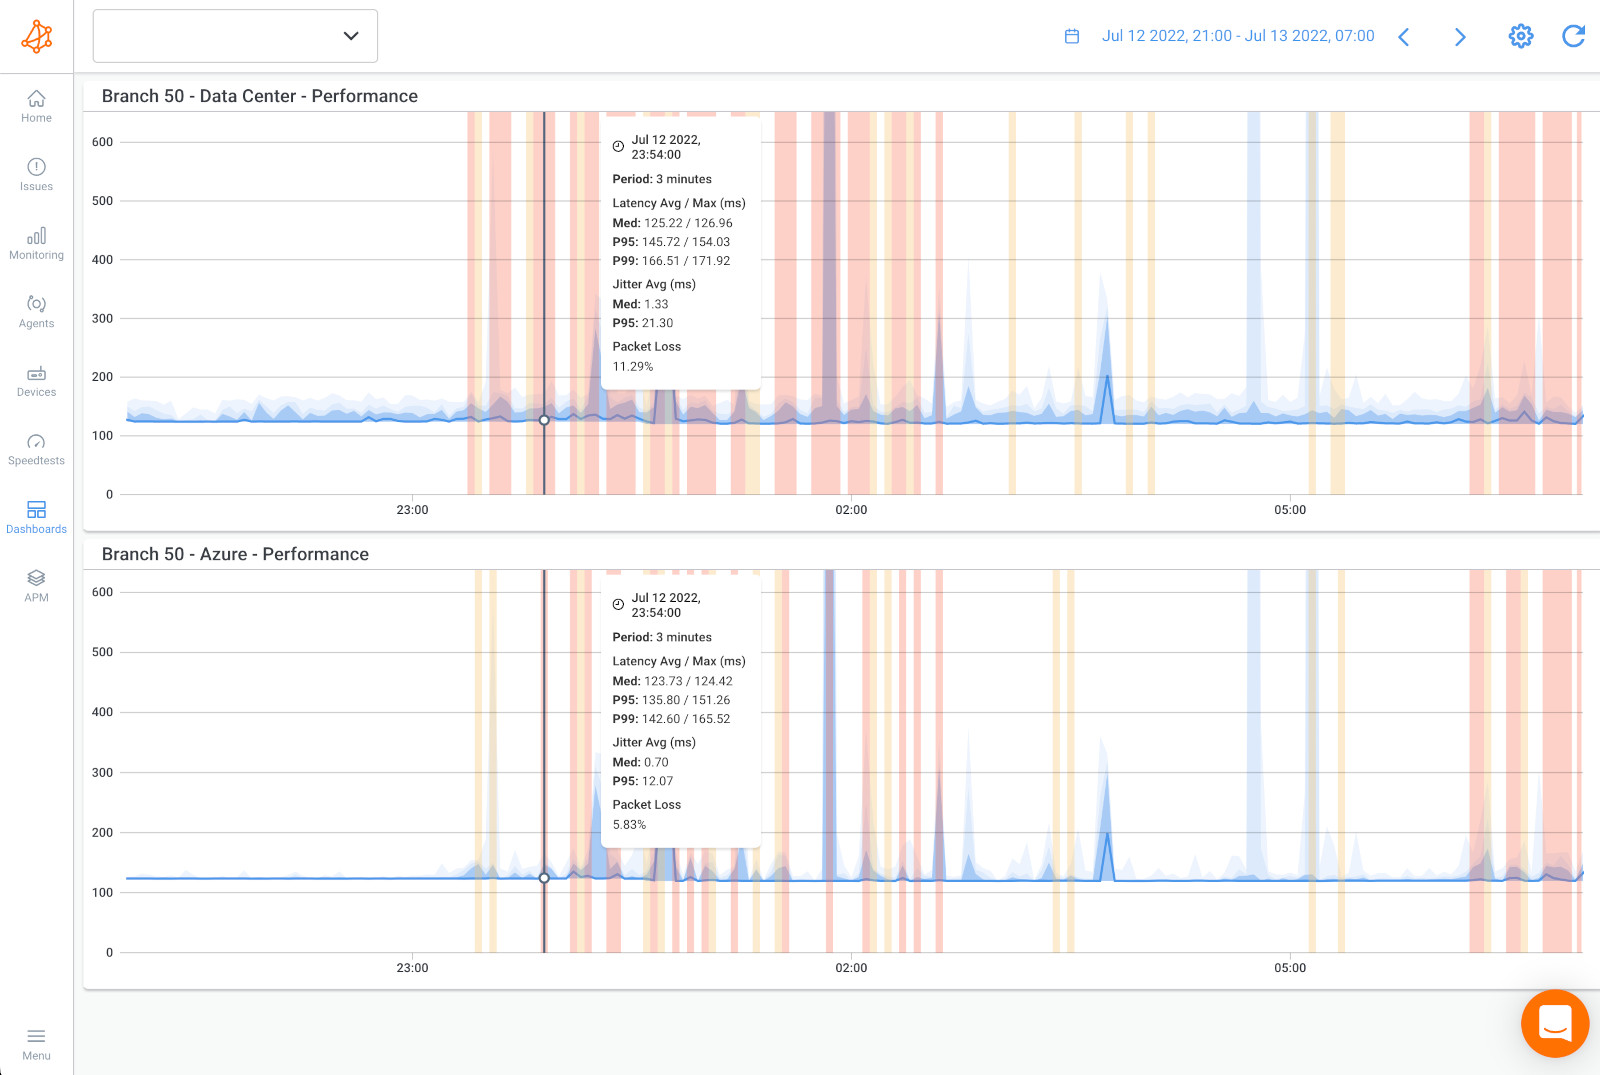 Obkio network performance monitoring tool